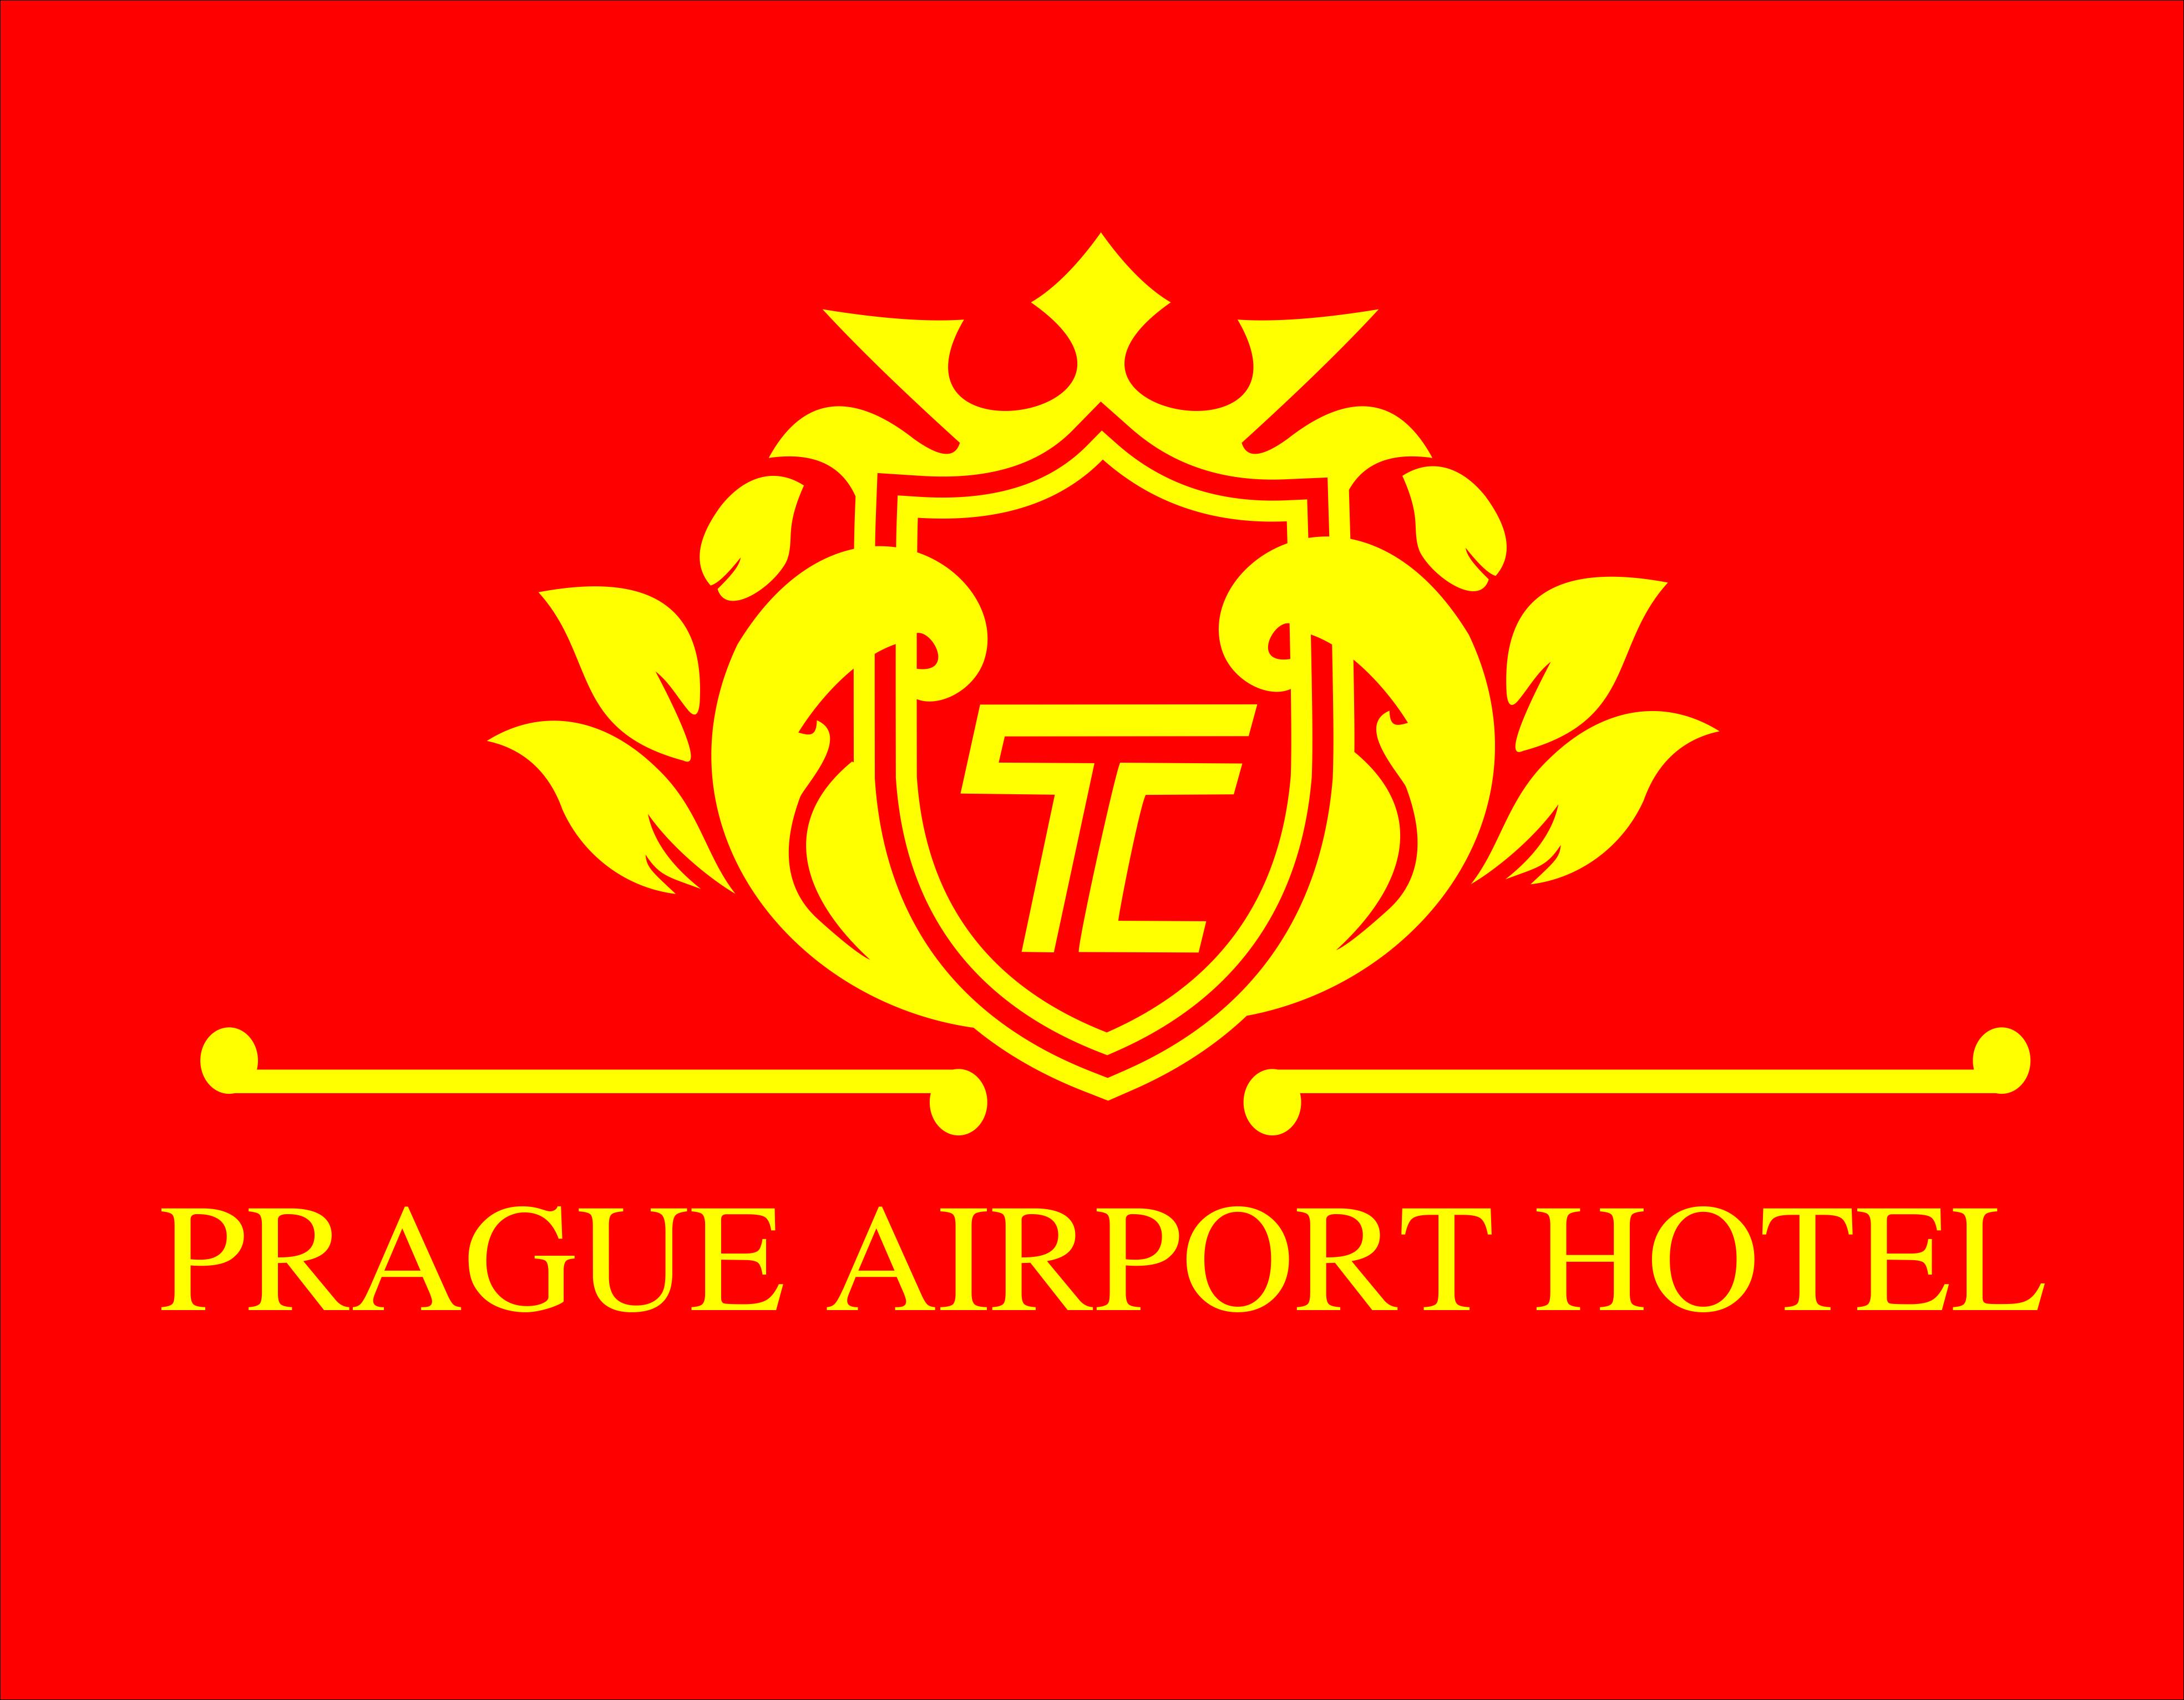 Prague airport hotel